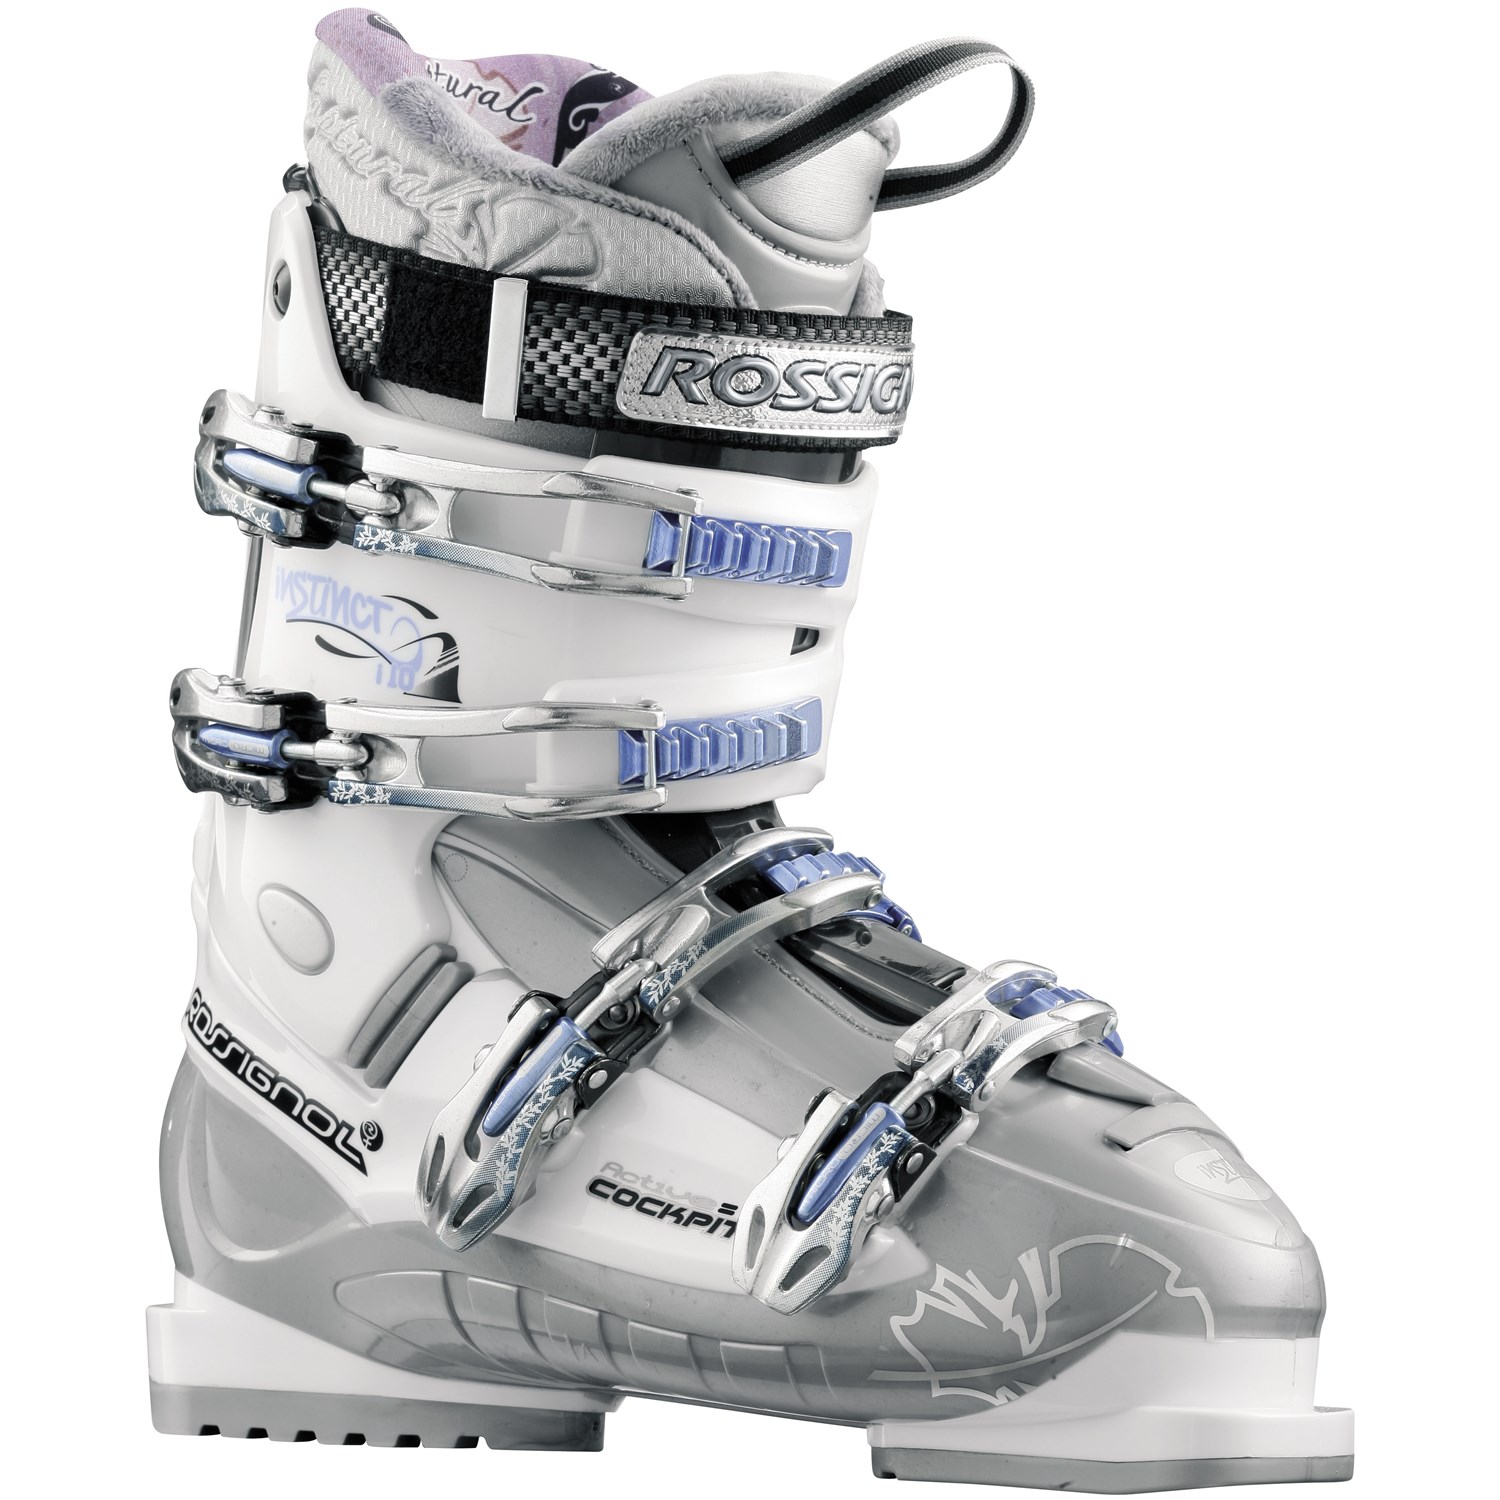 Rossignol Intensive I10 Ski Boots - Women's 2007 | evo